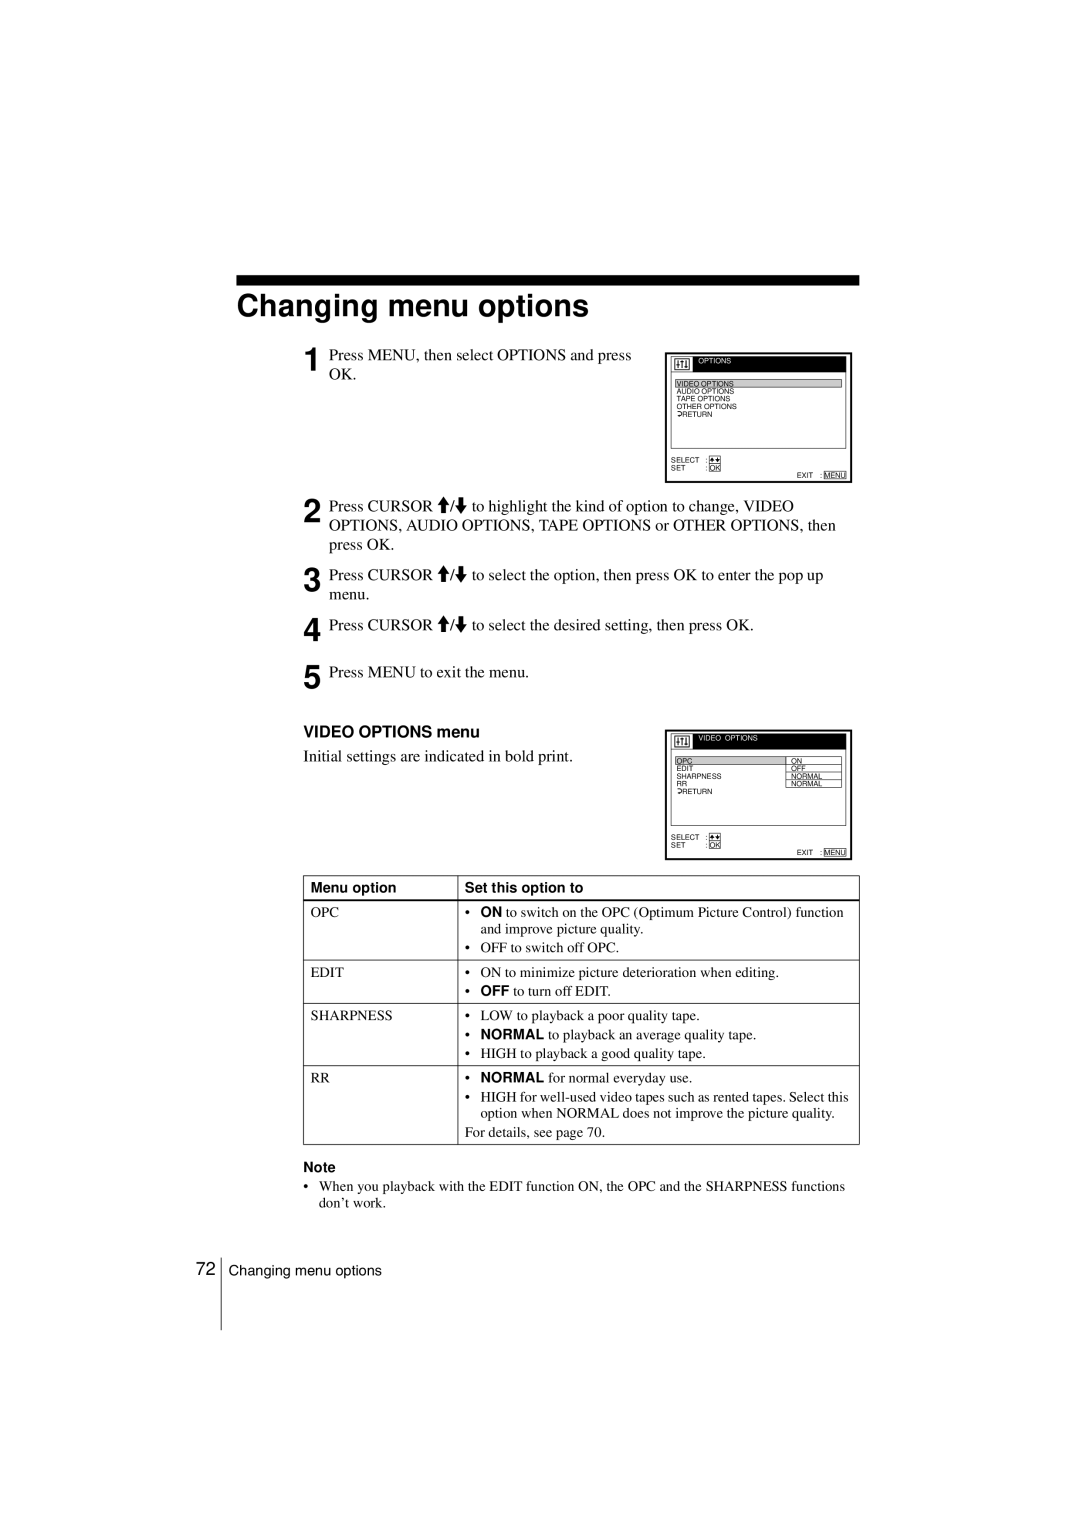 Sony SLV-SF990G manual Changing menu options, VIDEO OPTIONS menu 